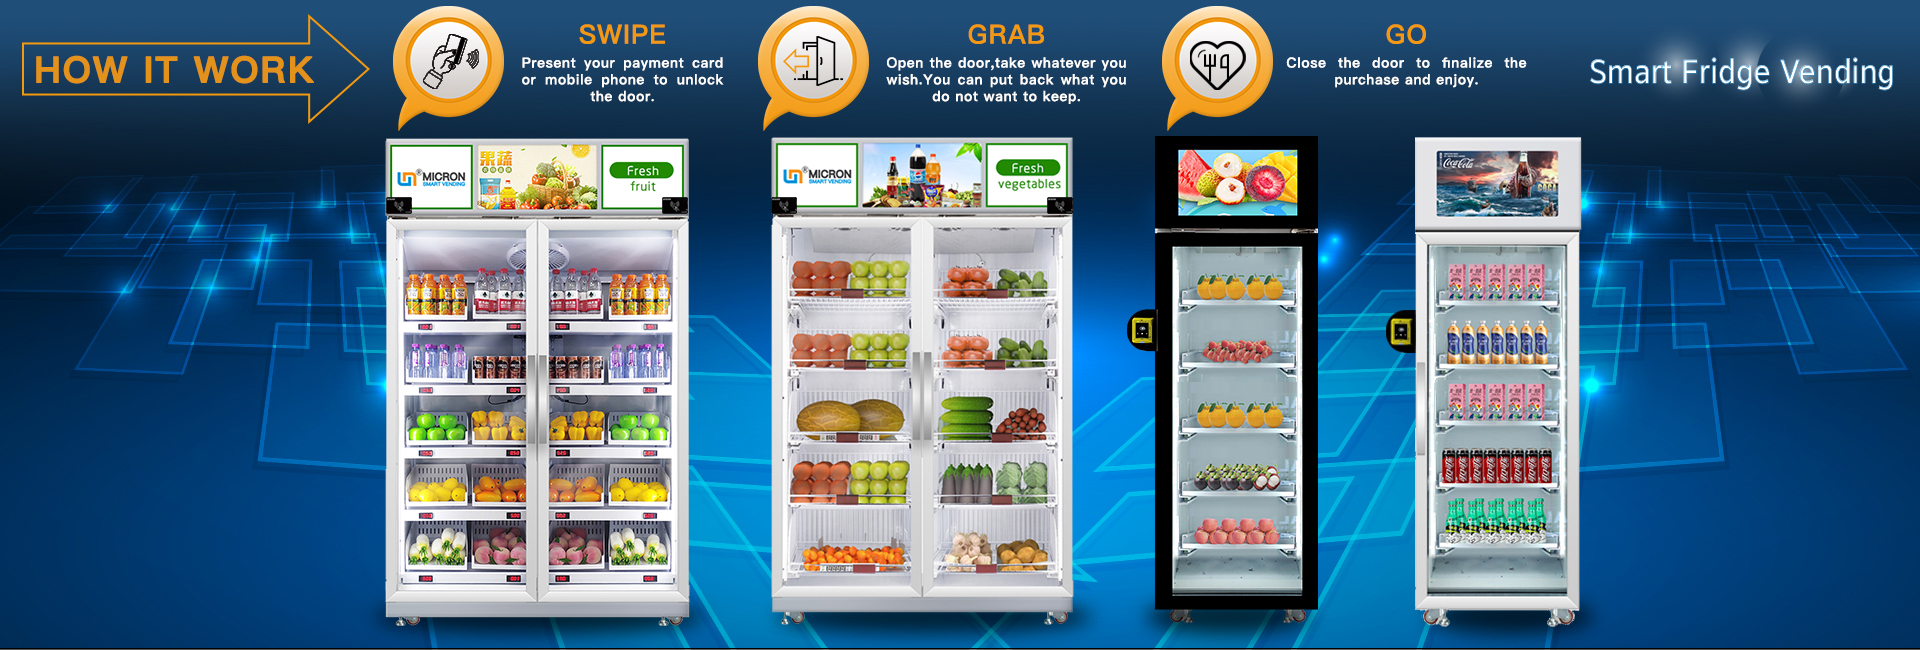 smart fridge vending machine how it work